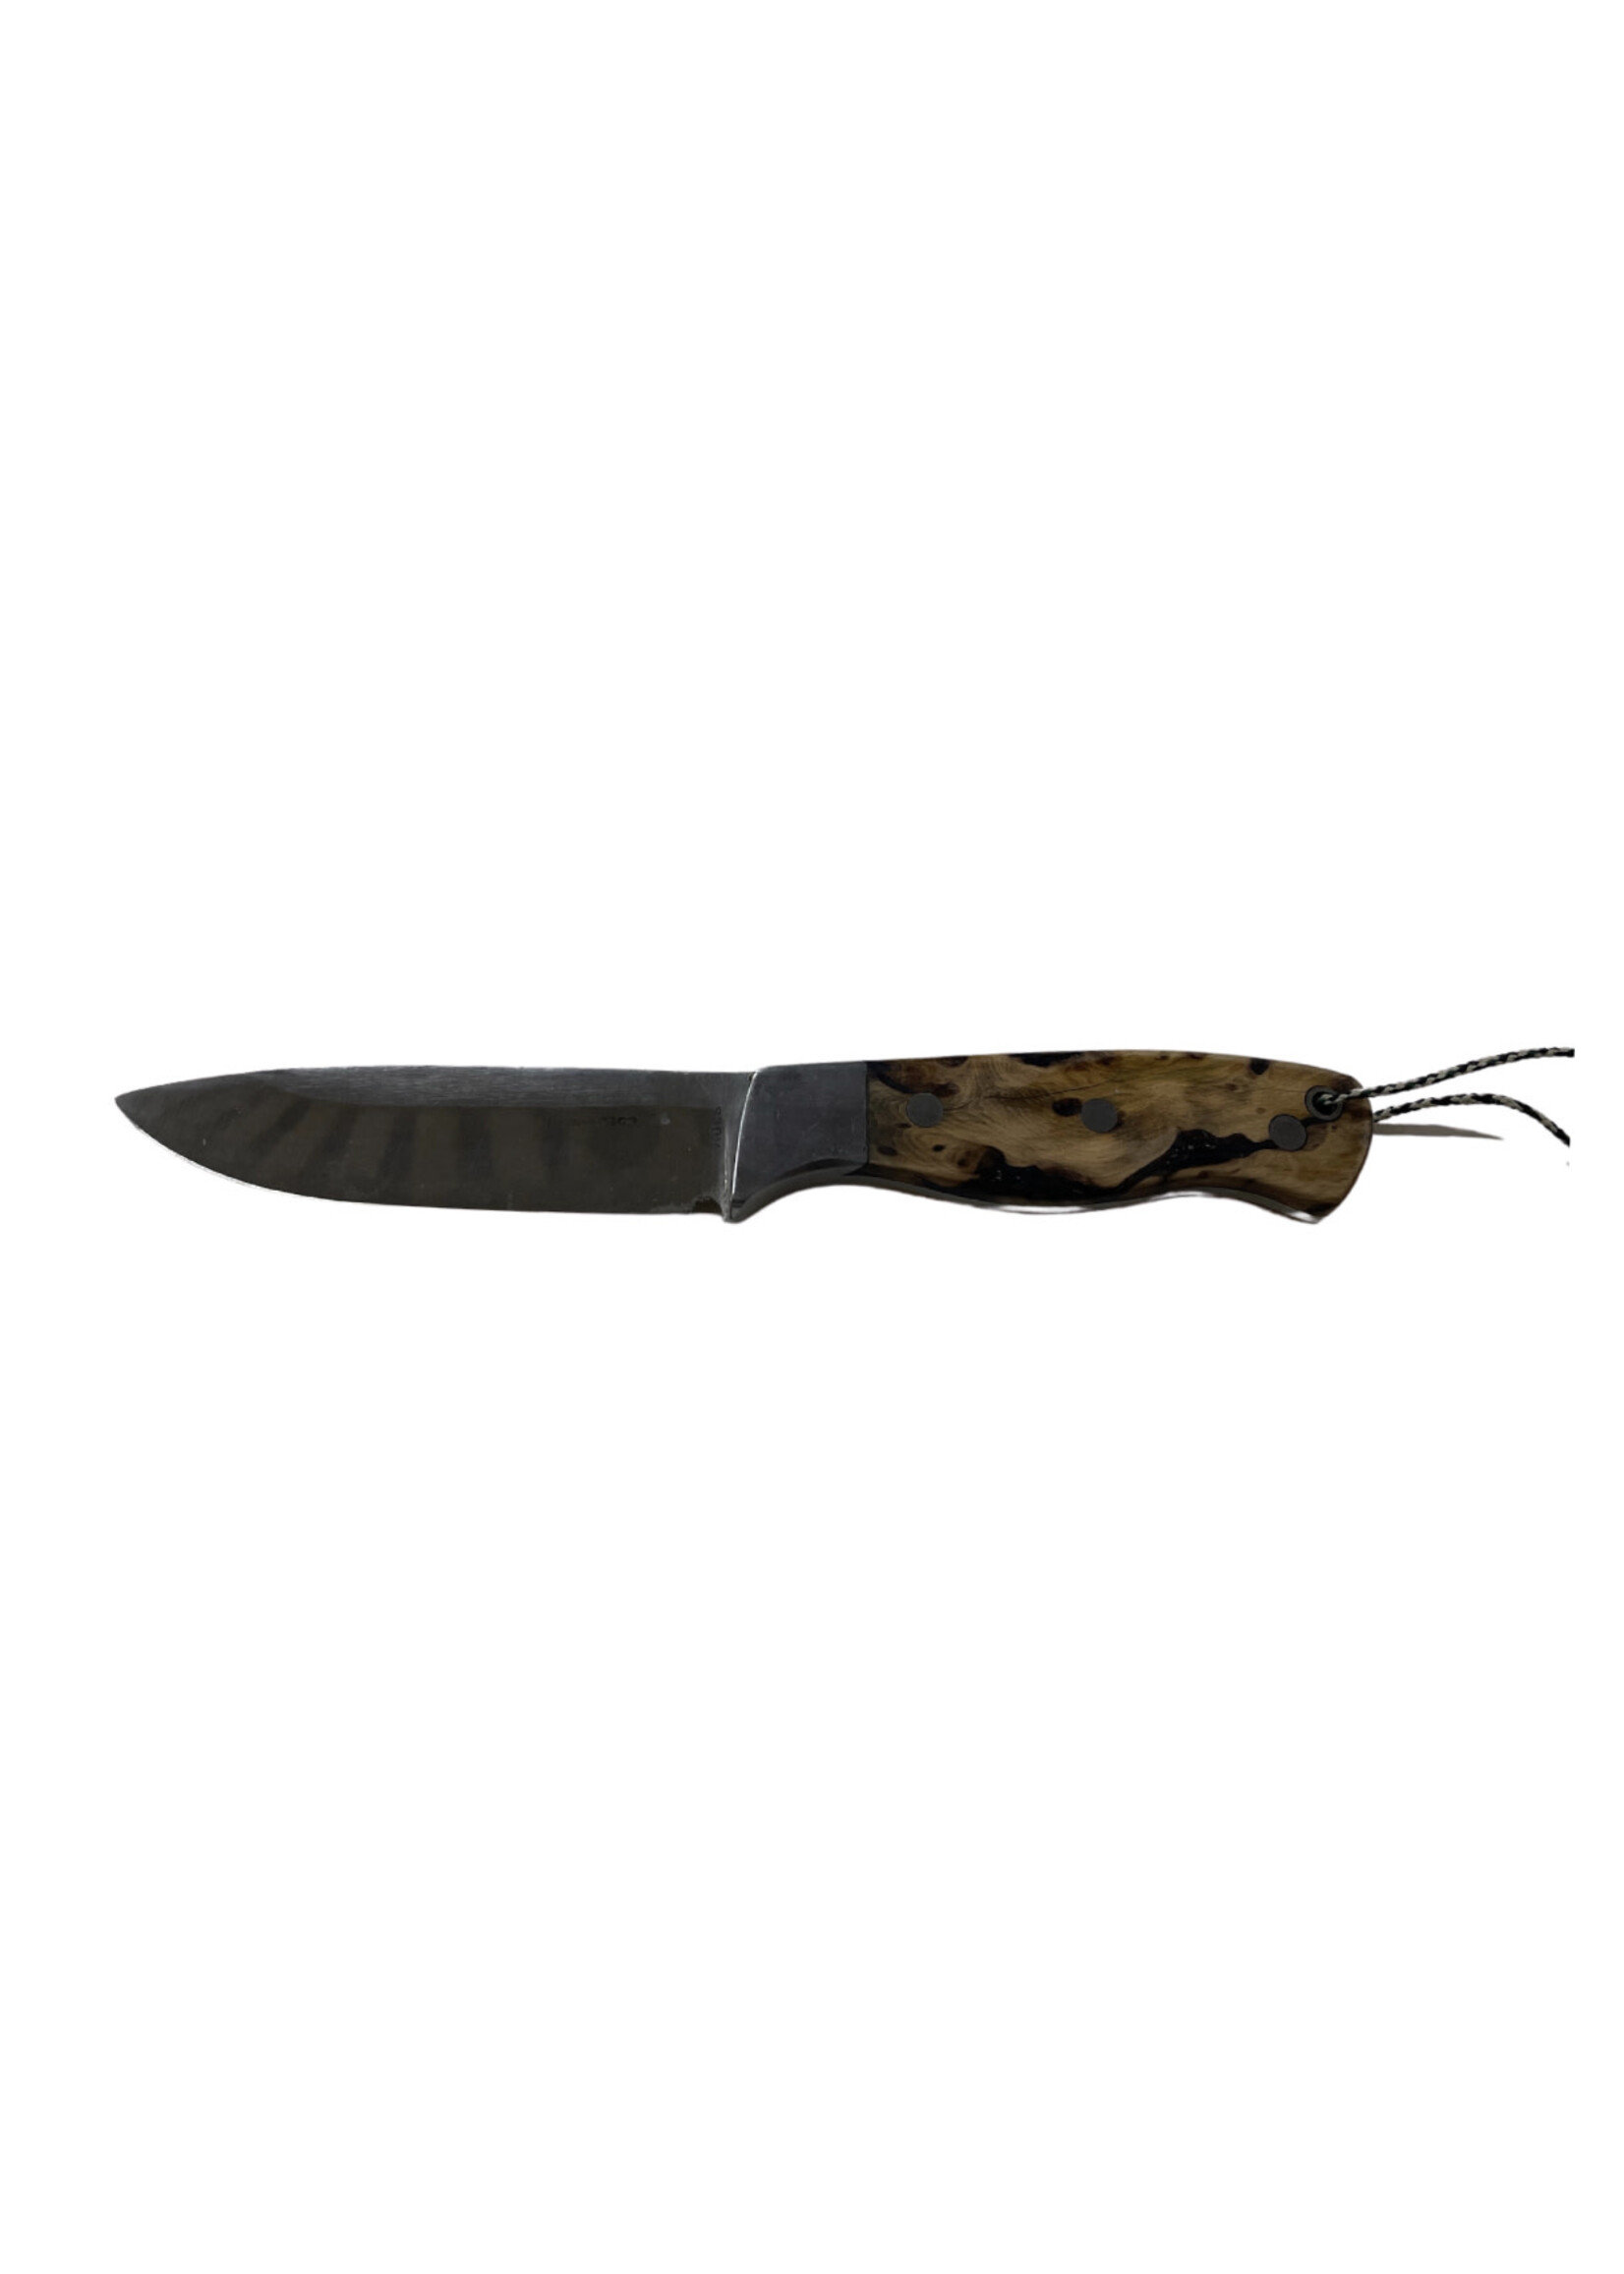 MORRIS KNIVES HUNTER KNIFE 4.5” S30V NOOTKA CYPRESS W/ LEATHER SHEATH